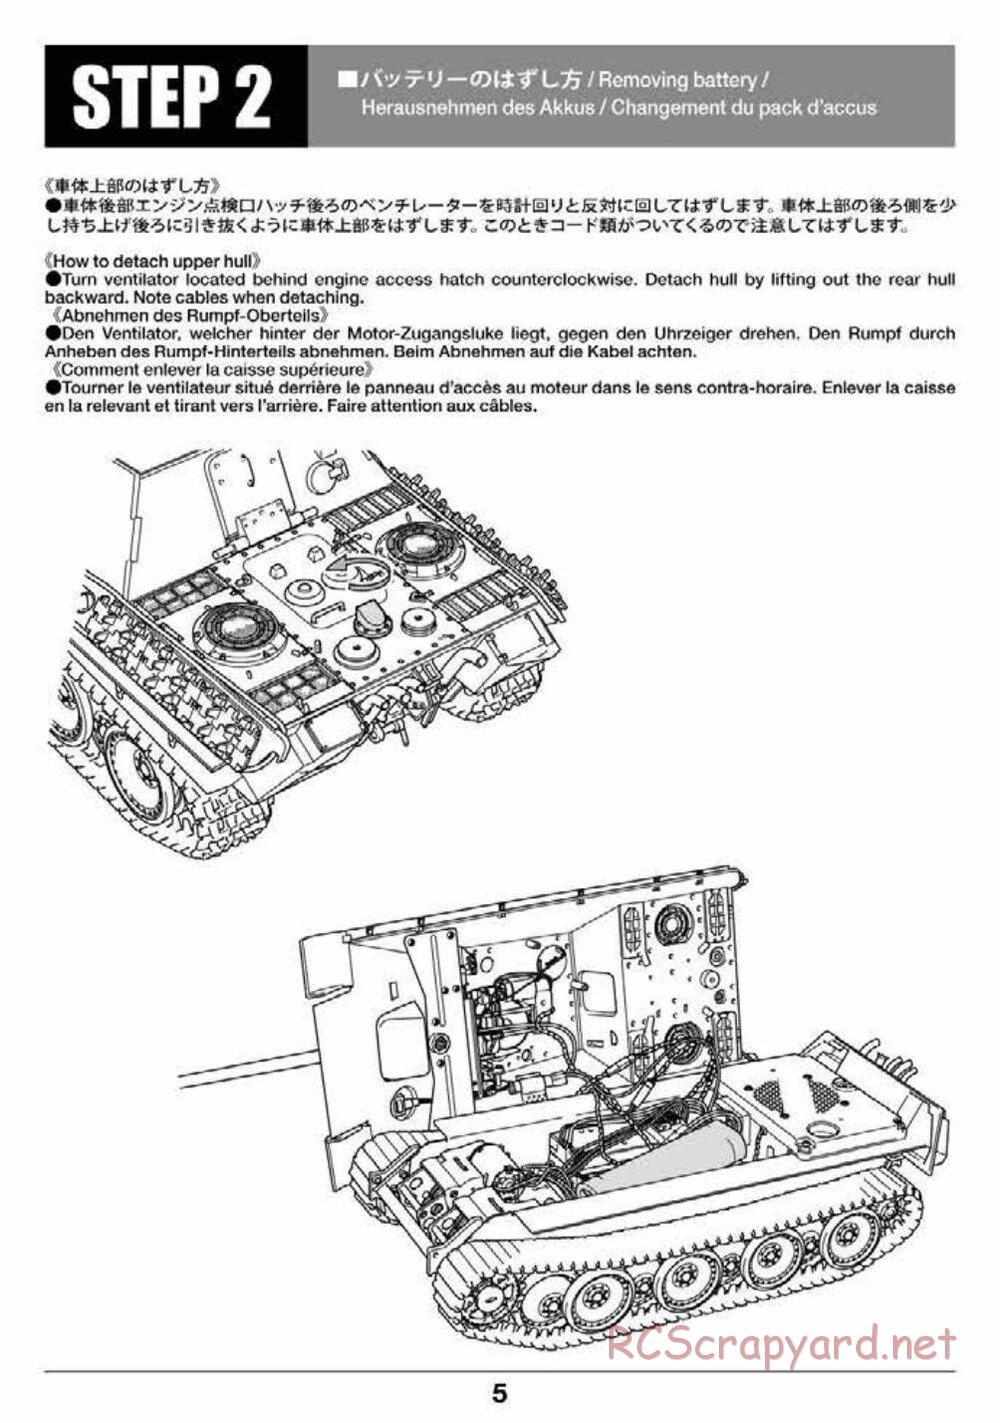 Tamiya - Jagdpanther - 1/16 Scale Chassis - Operation Manual - Page 5